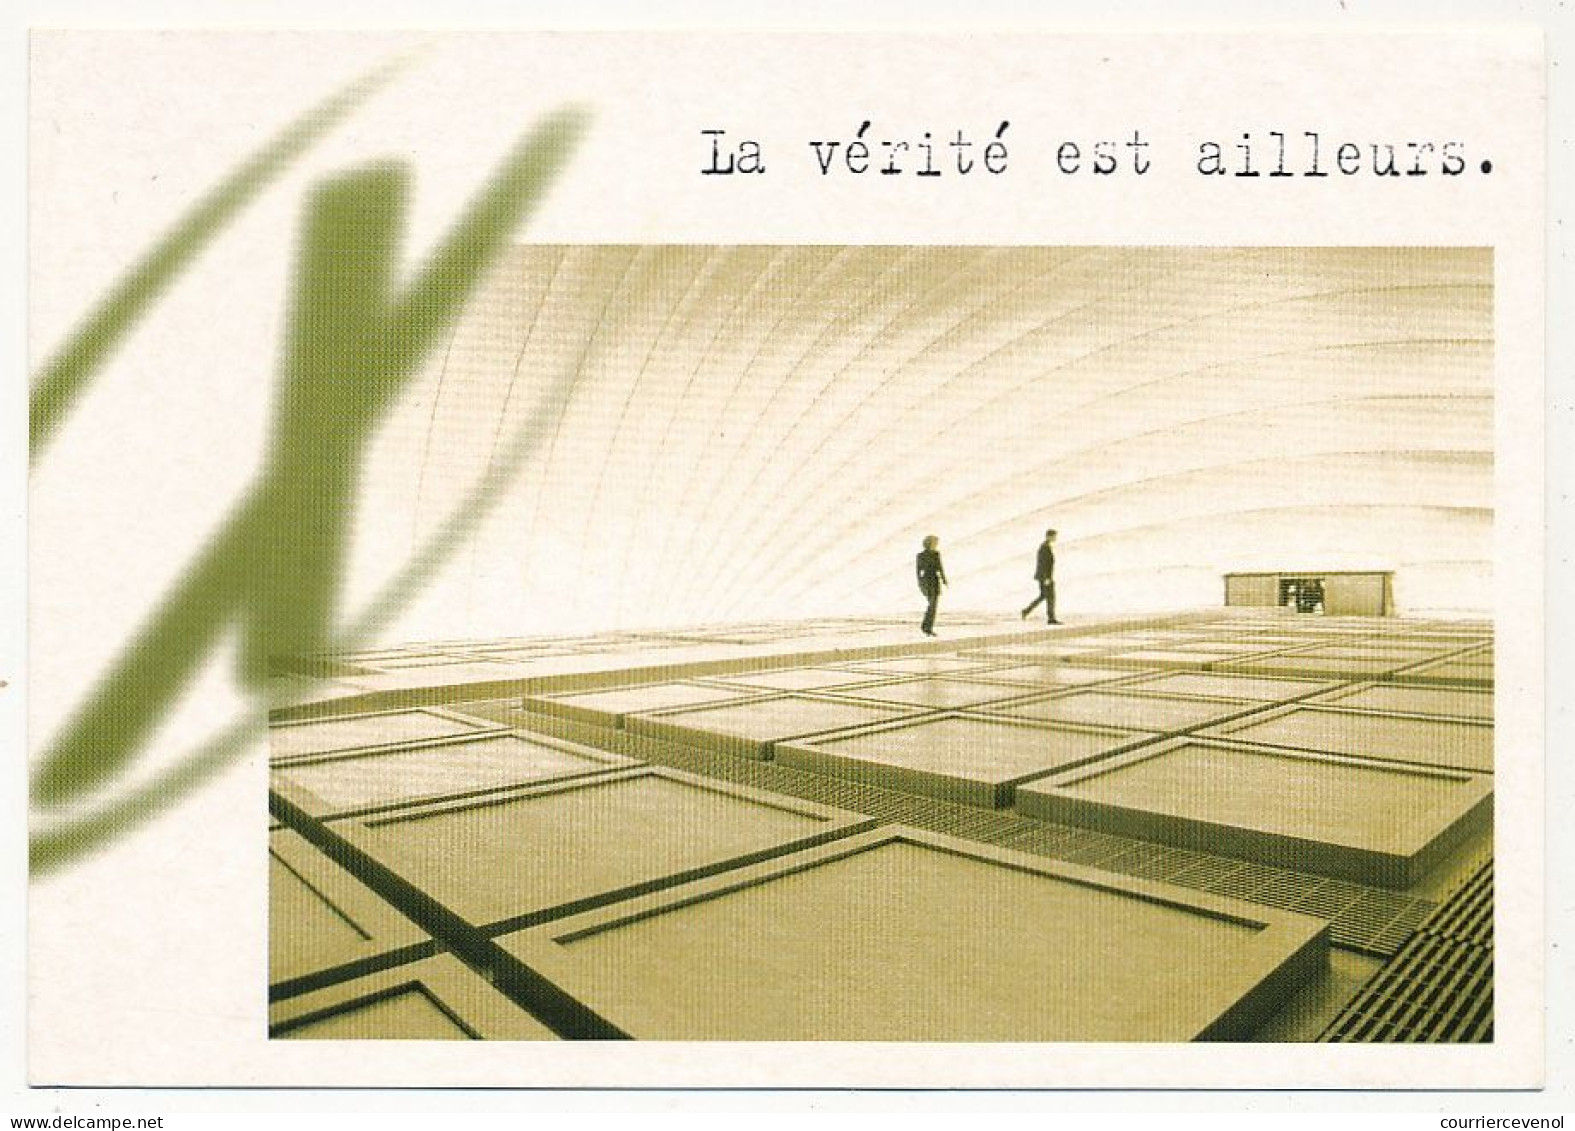 4 Cartes Postales PAP - The X Files, Le Film - Cartes Postales Neuves - Standard Postcards & Stamped On Demand (before 1995)